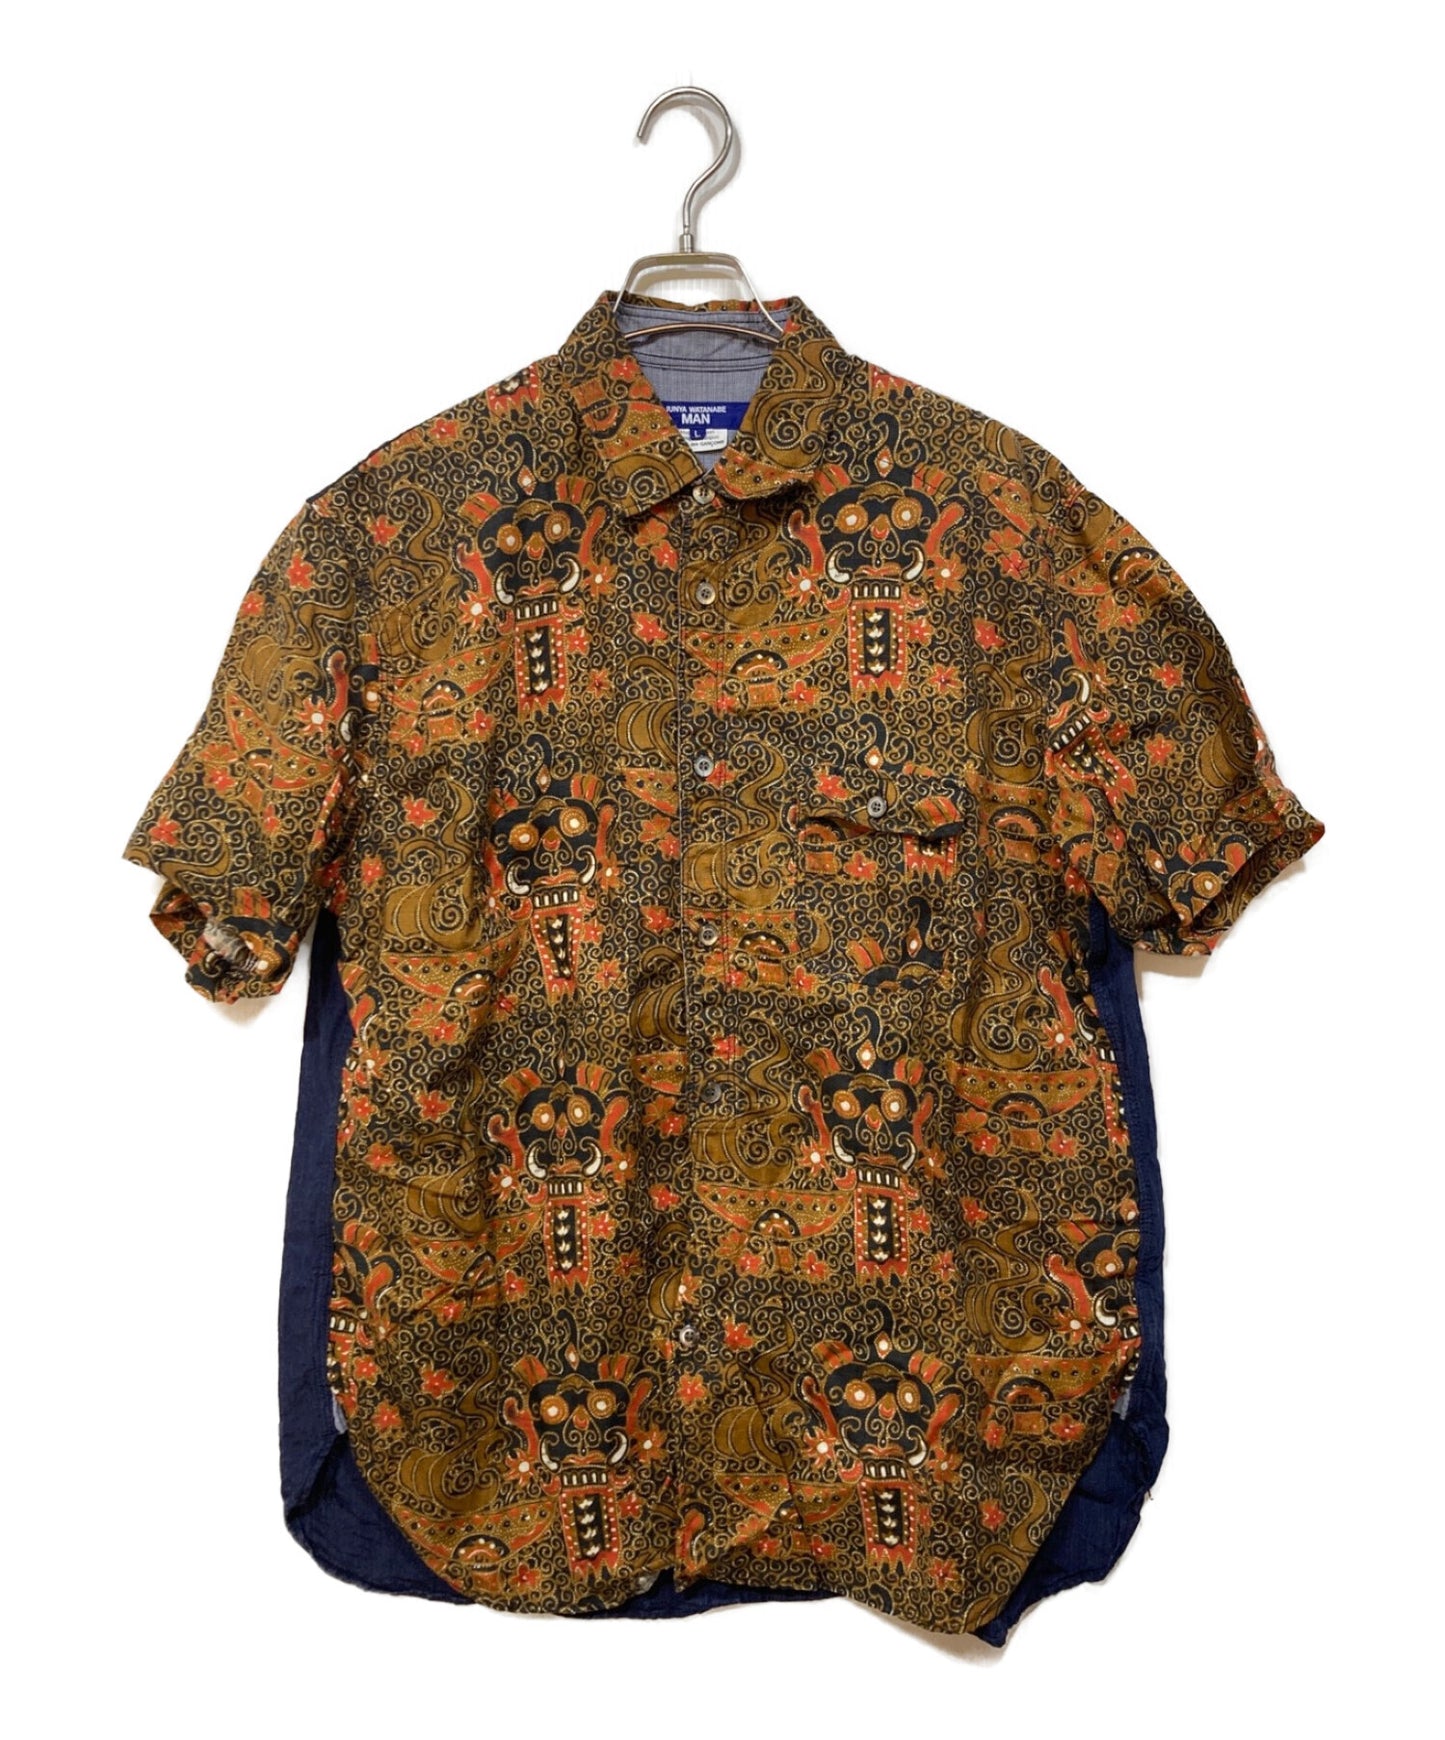 COMME des GARCONS JUNYA WATANABE MAN Linen Paisley Pattern Short-Sleeved Shirt WI-B025